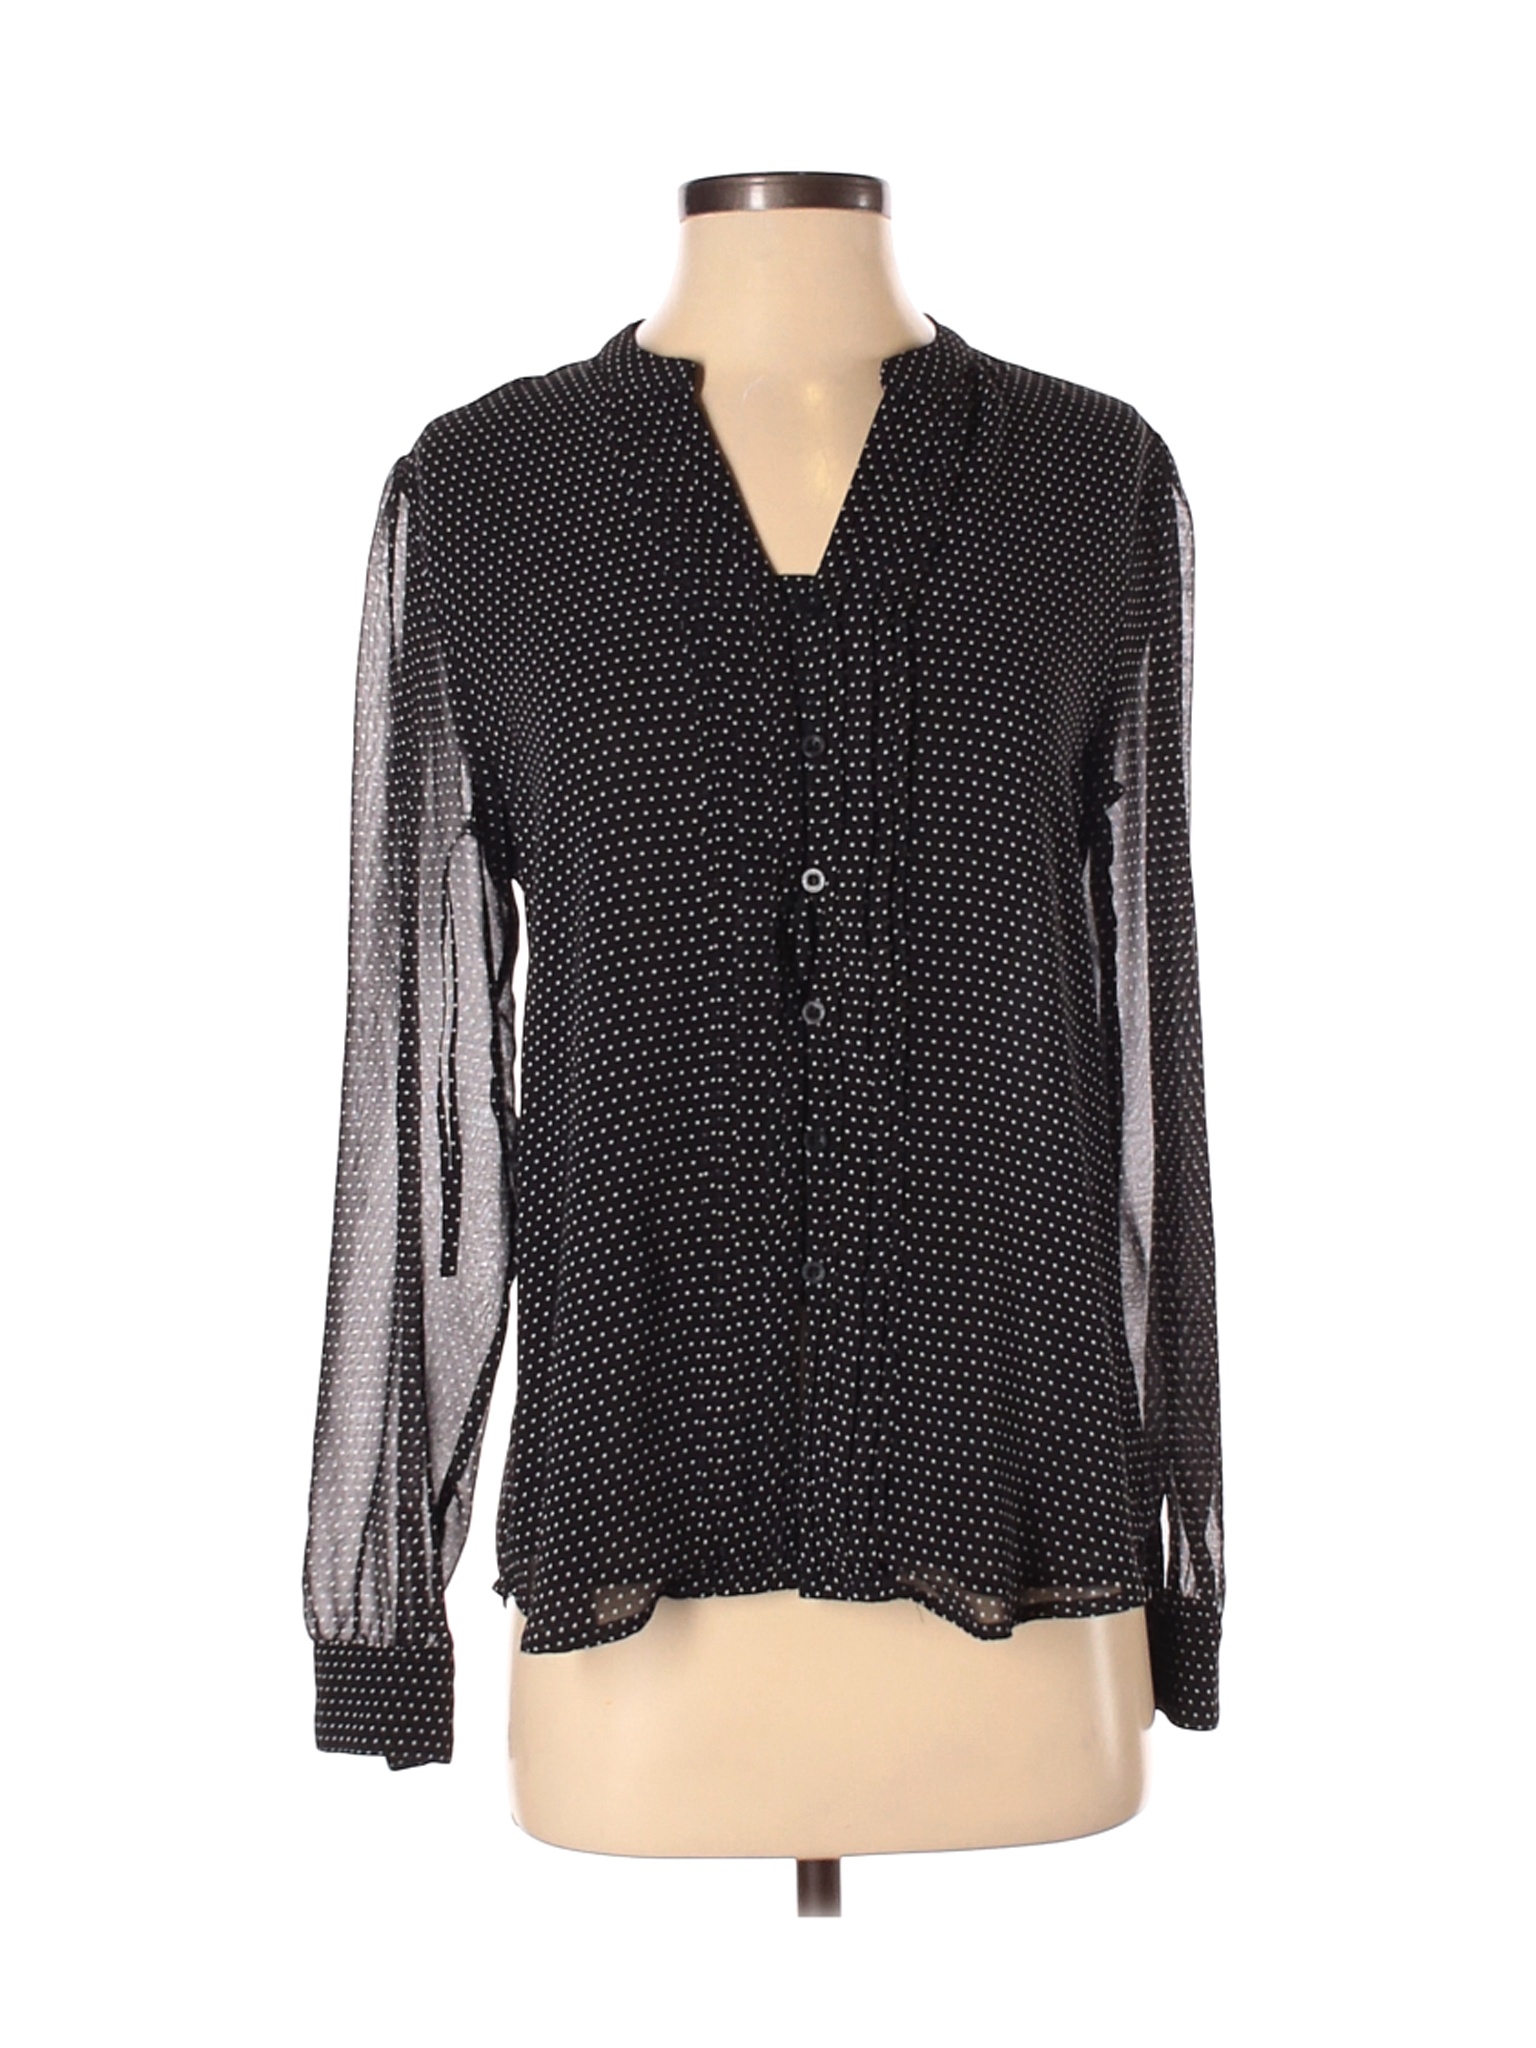 Karl Lagerfeld Women Black Long Sleeve Blouse XS | eBay